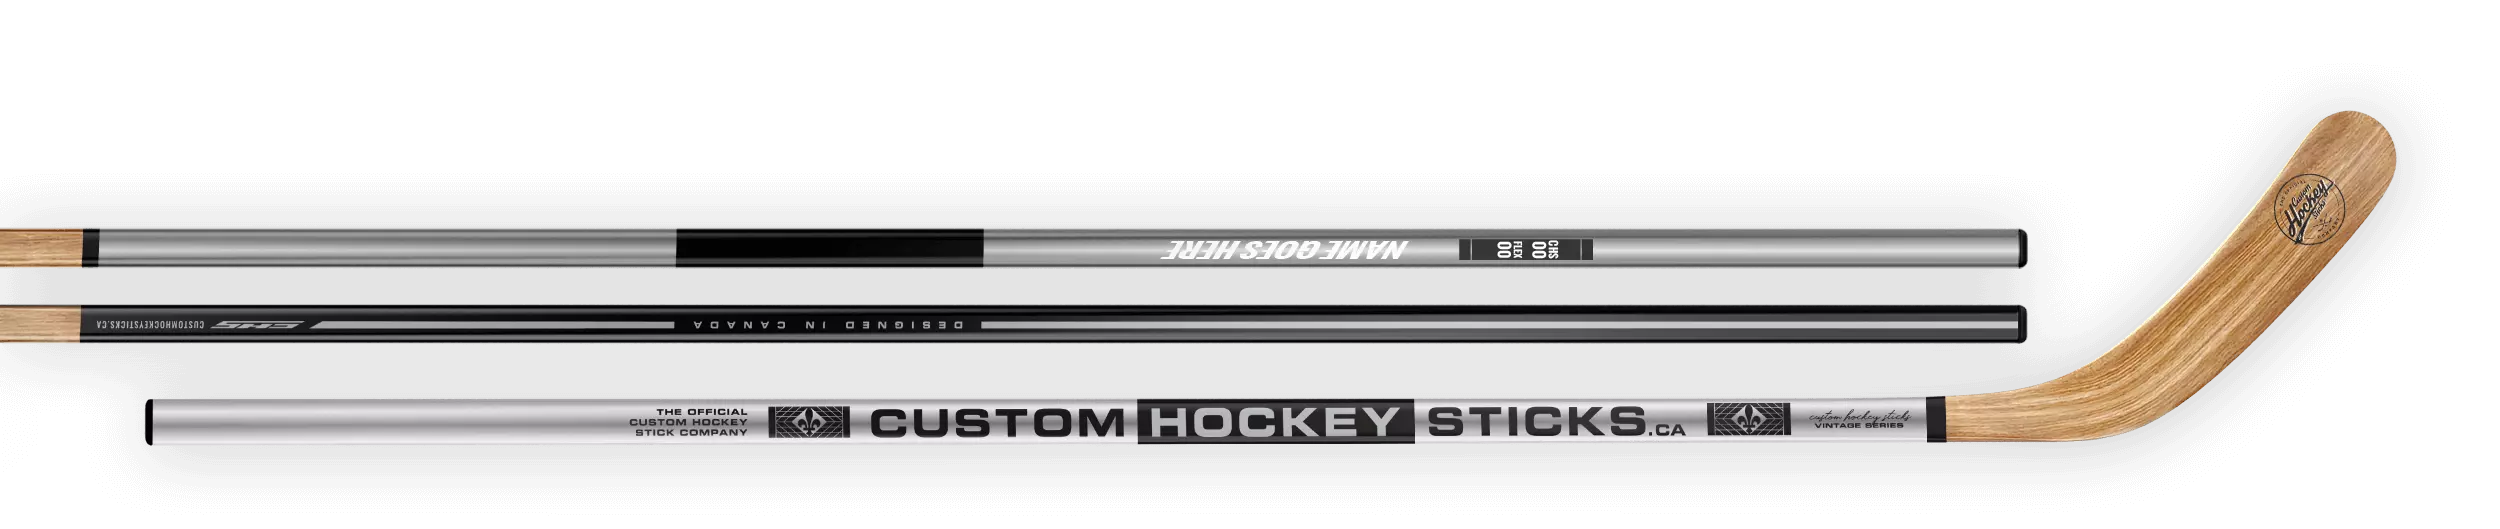 Custom Hockey Sticks